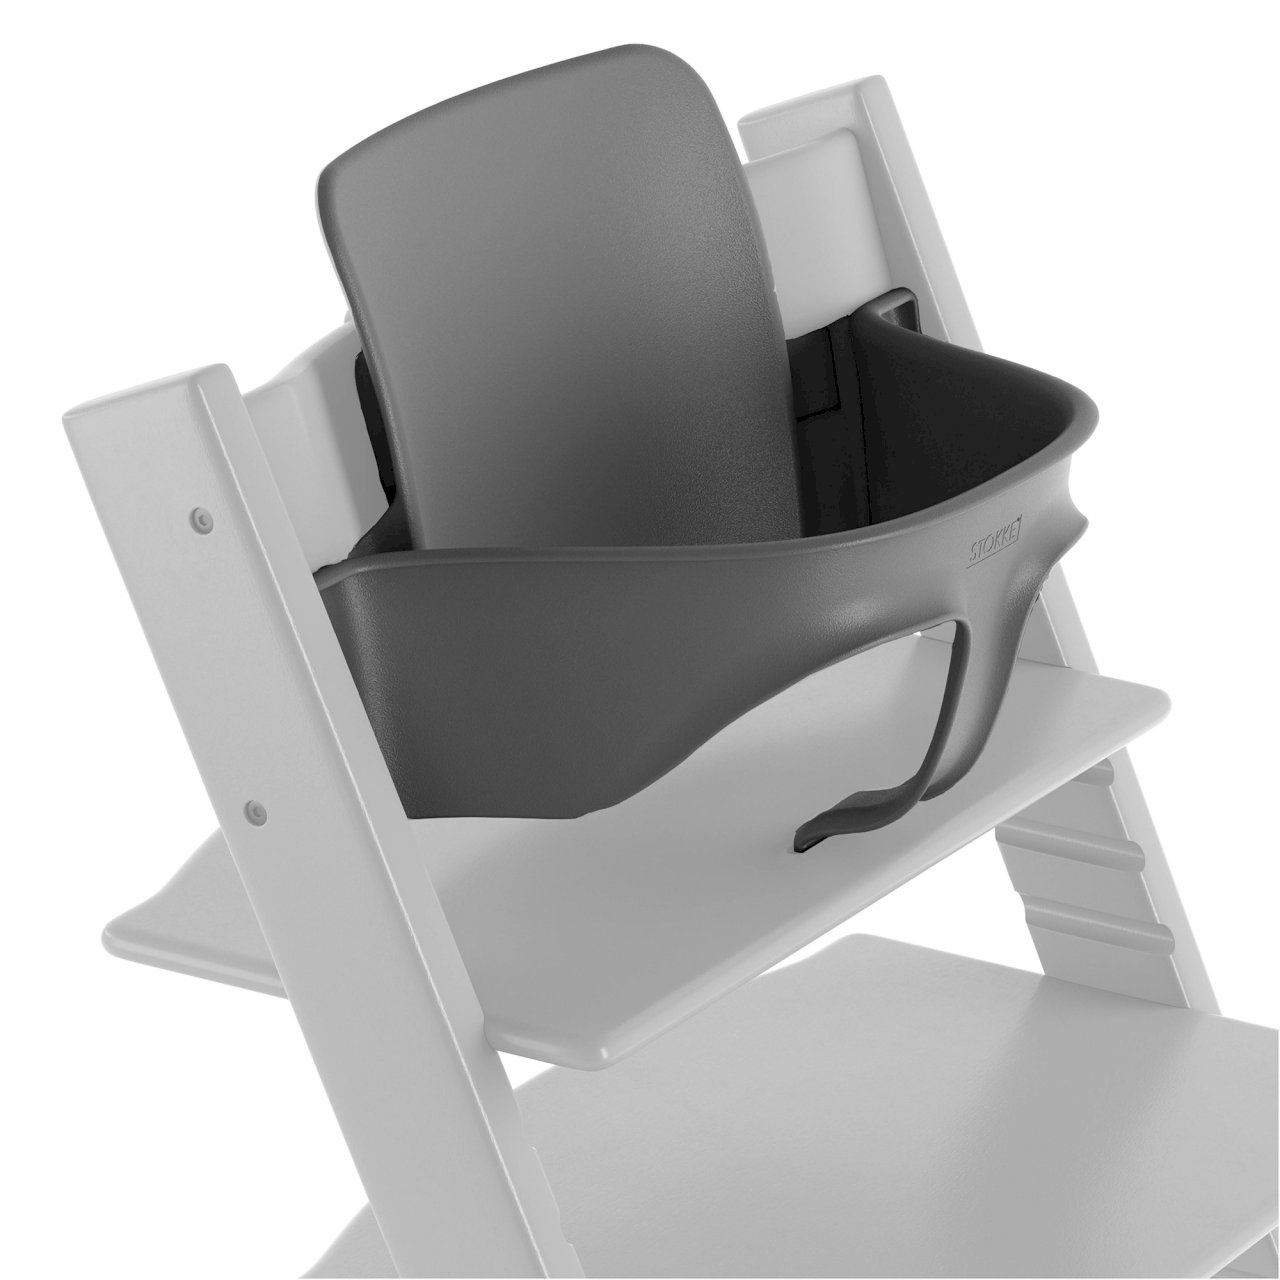 Пластиковая вставка stokke baby set для стульчика tripp trapp storm grey, серый фото